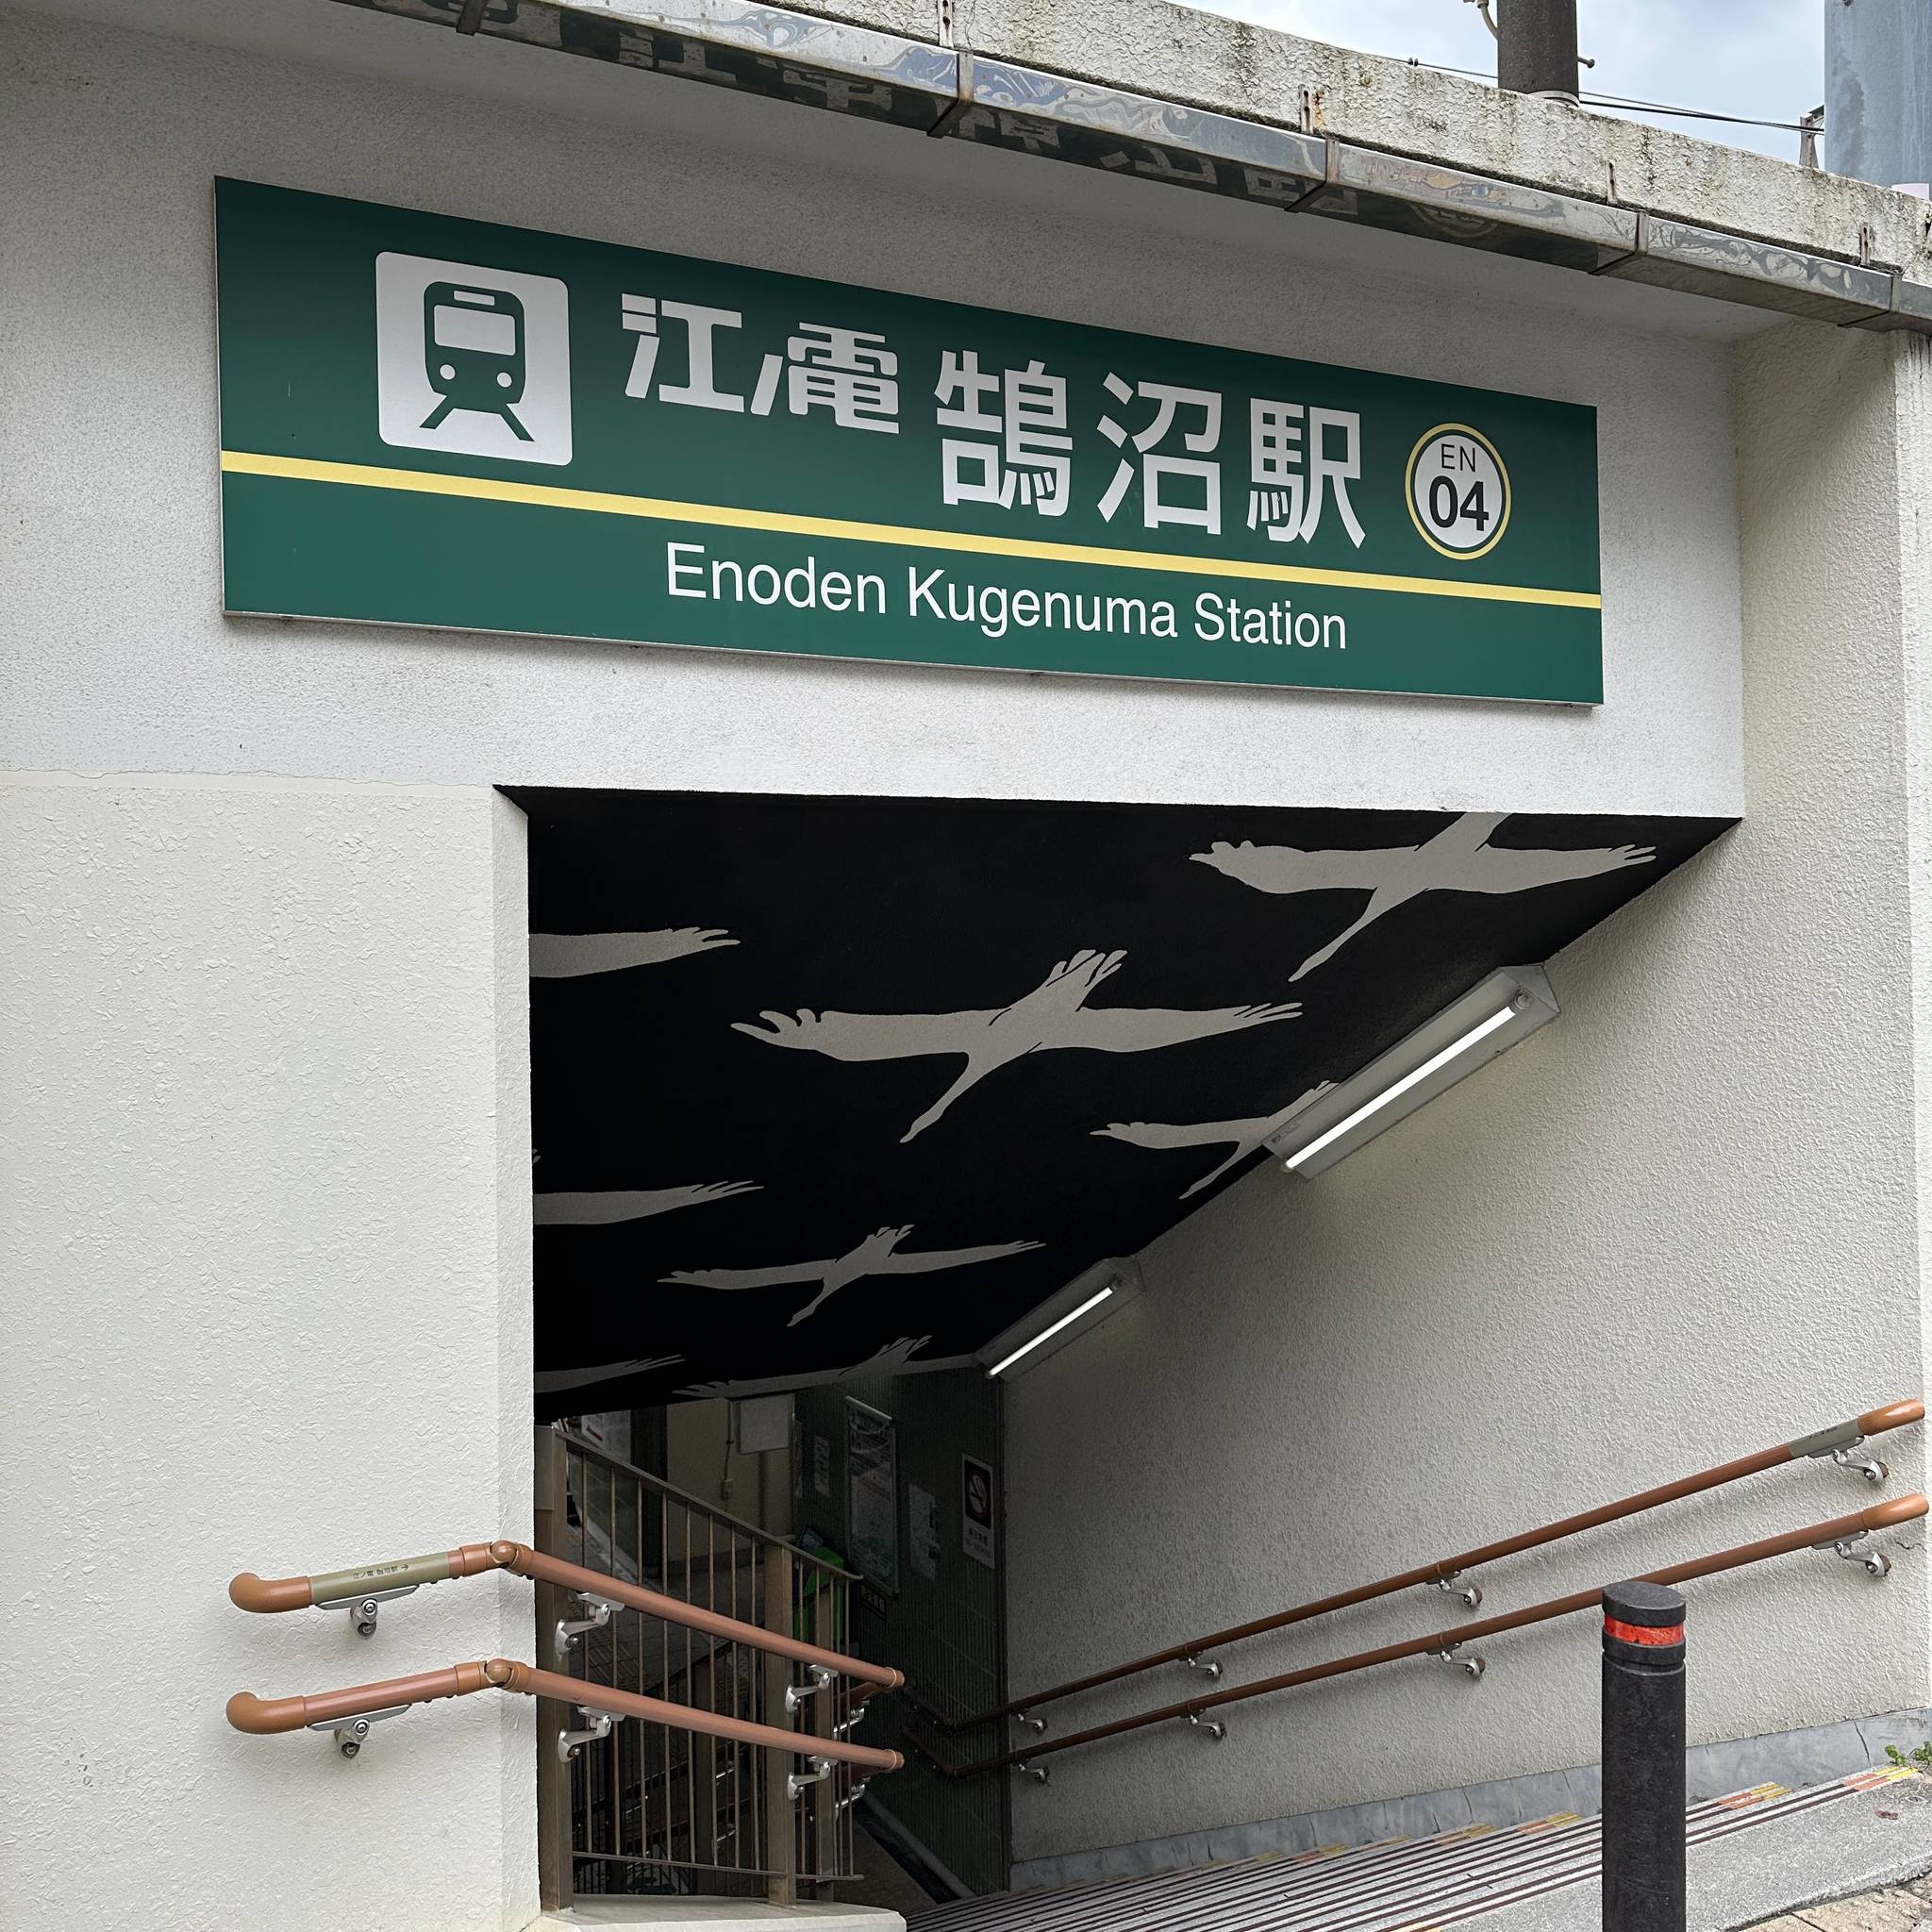 Eastside Transition&mdash;Kugenuma train station Enoden - 04